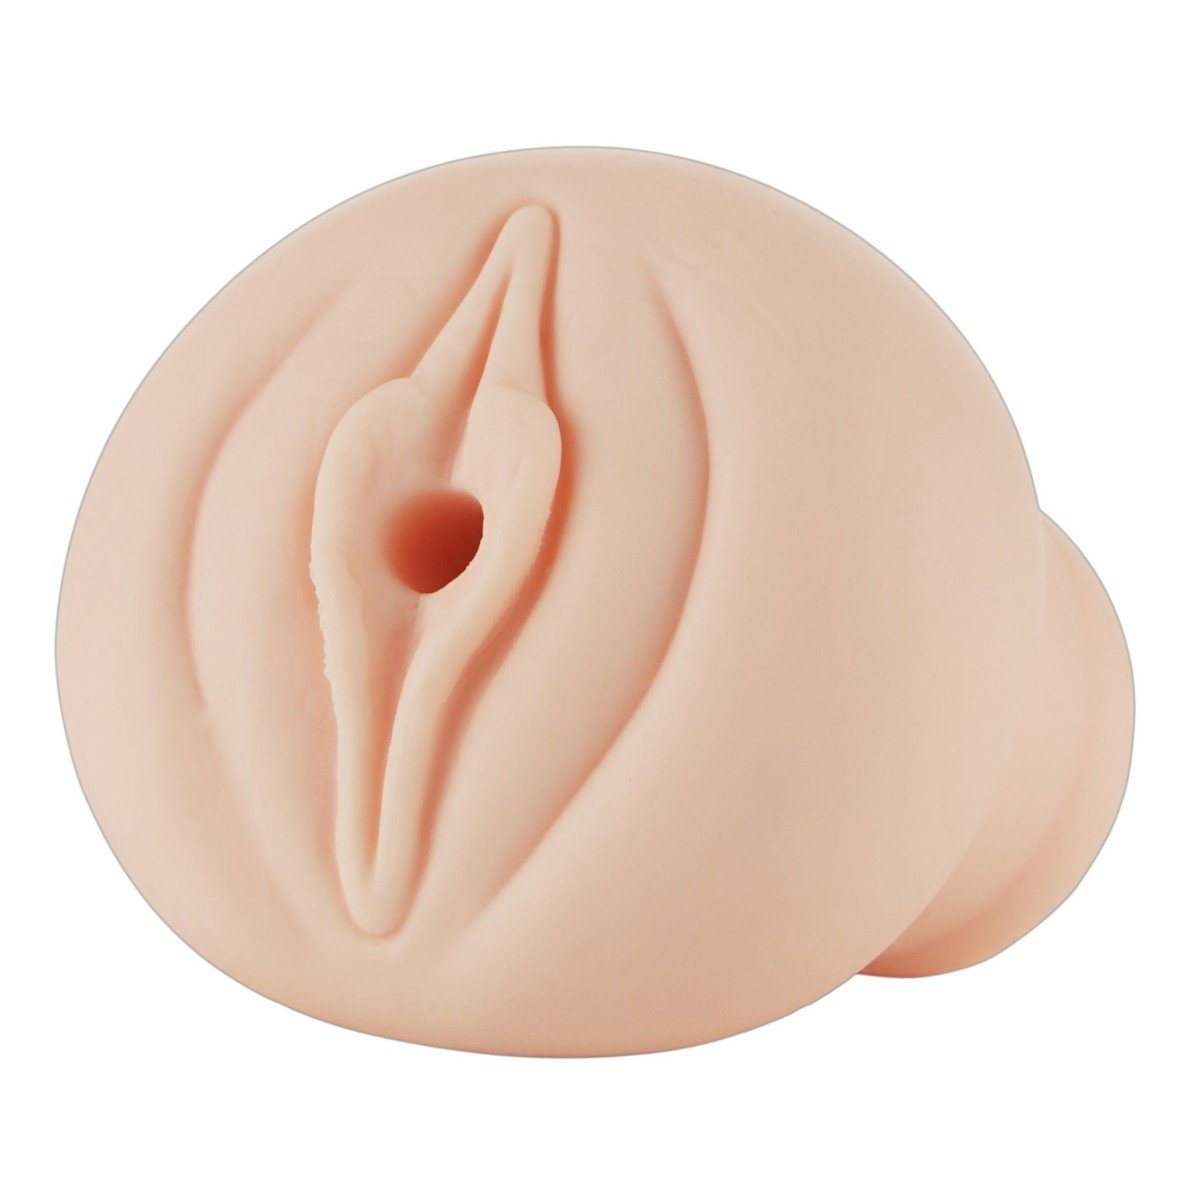 Me You Us Miss Maria Pump Sleeve Flesh OS, univerzální manžeta ve tvaru vagíny